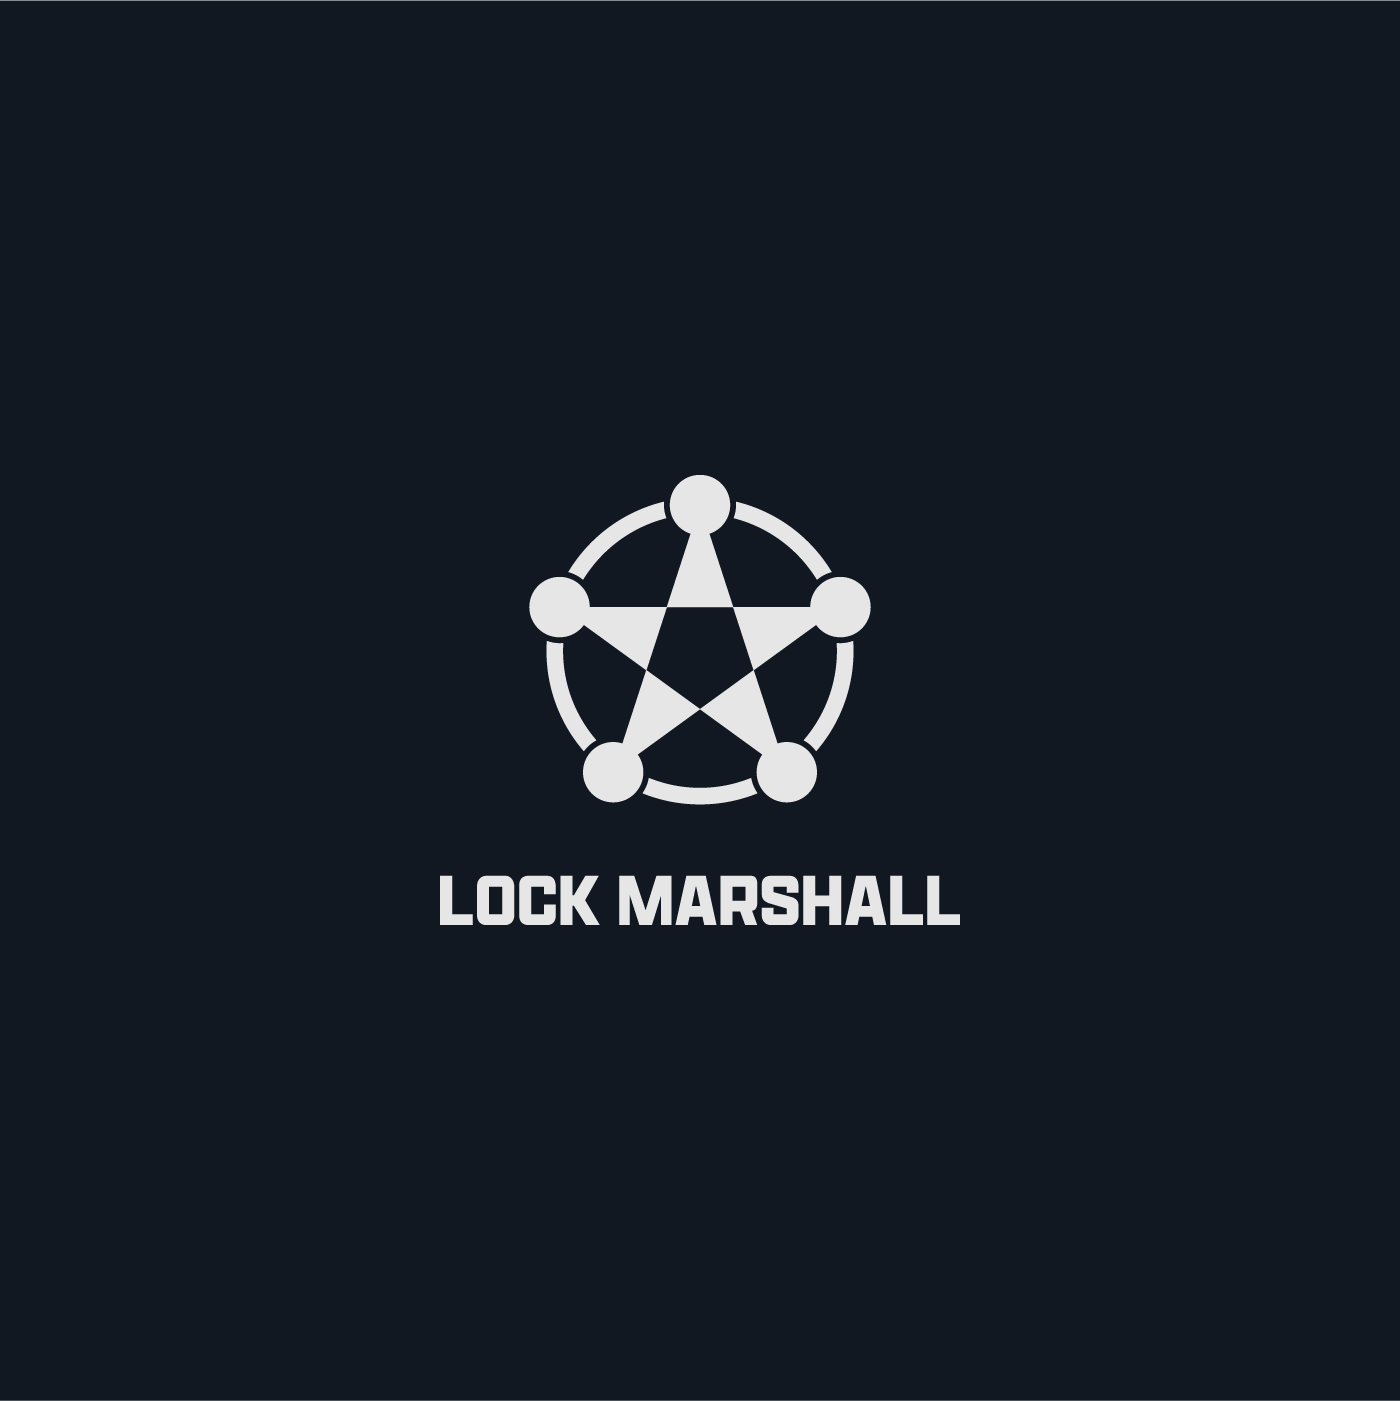 Lock Marshall - Logo Concept